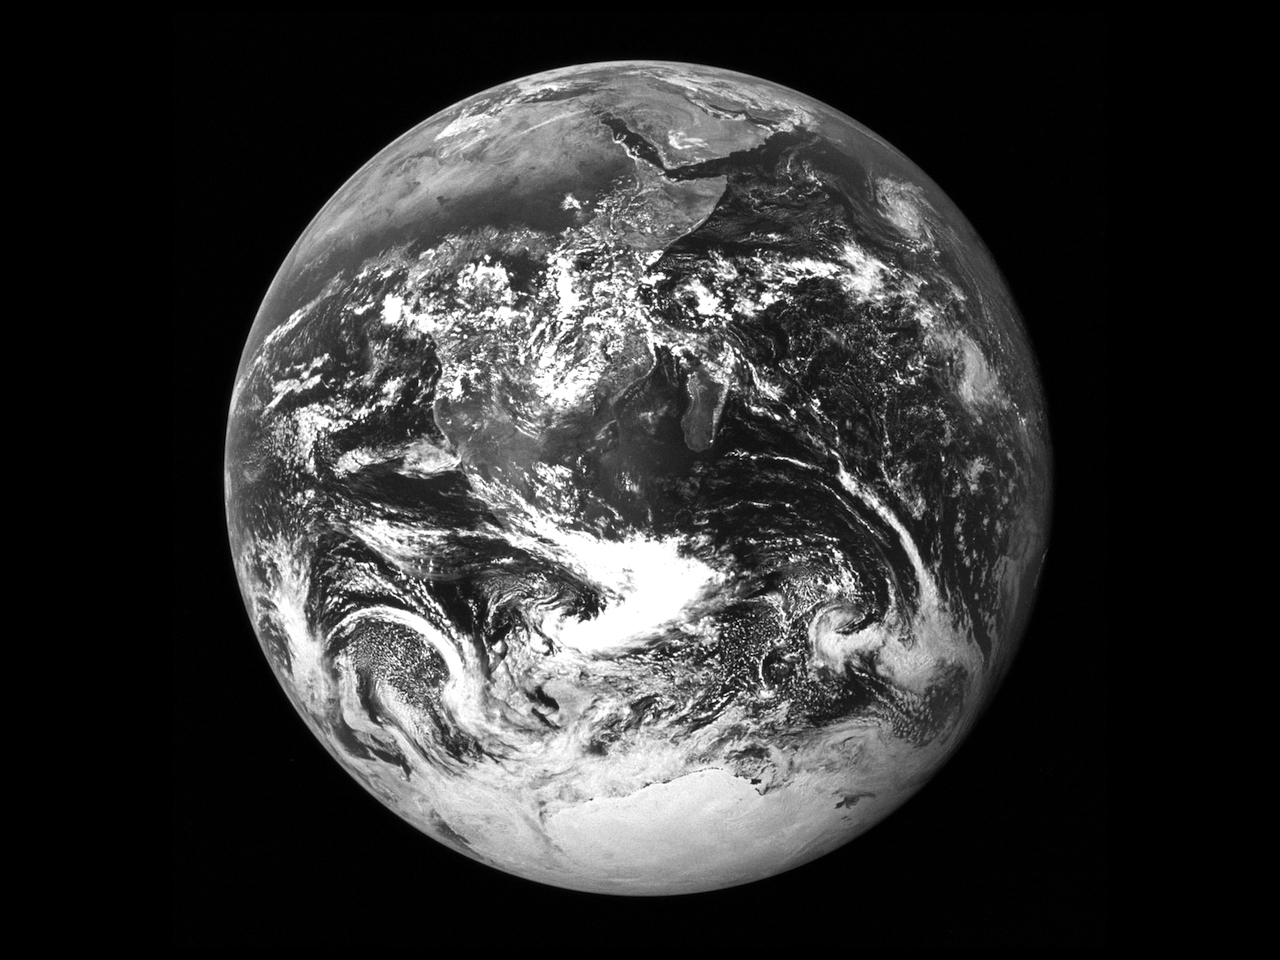 NASA image AS17-148-22727, taken by Harrison Schmitt.